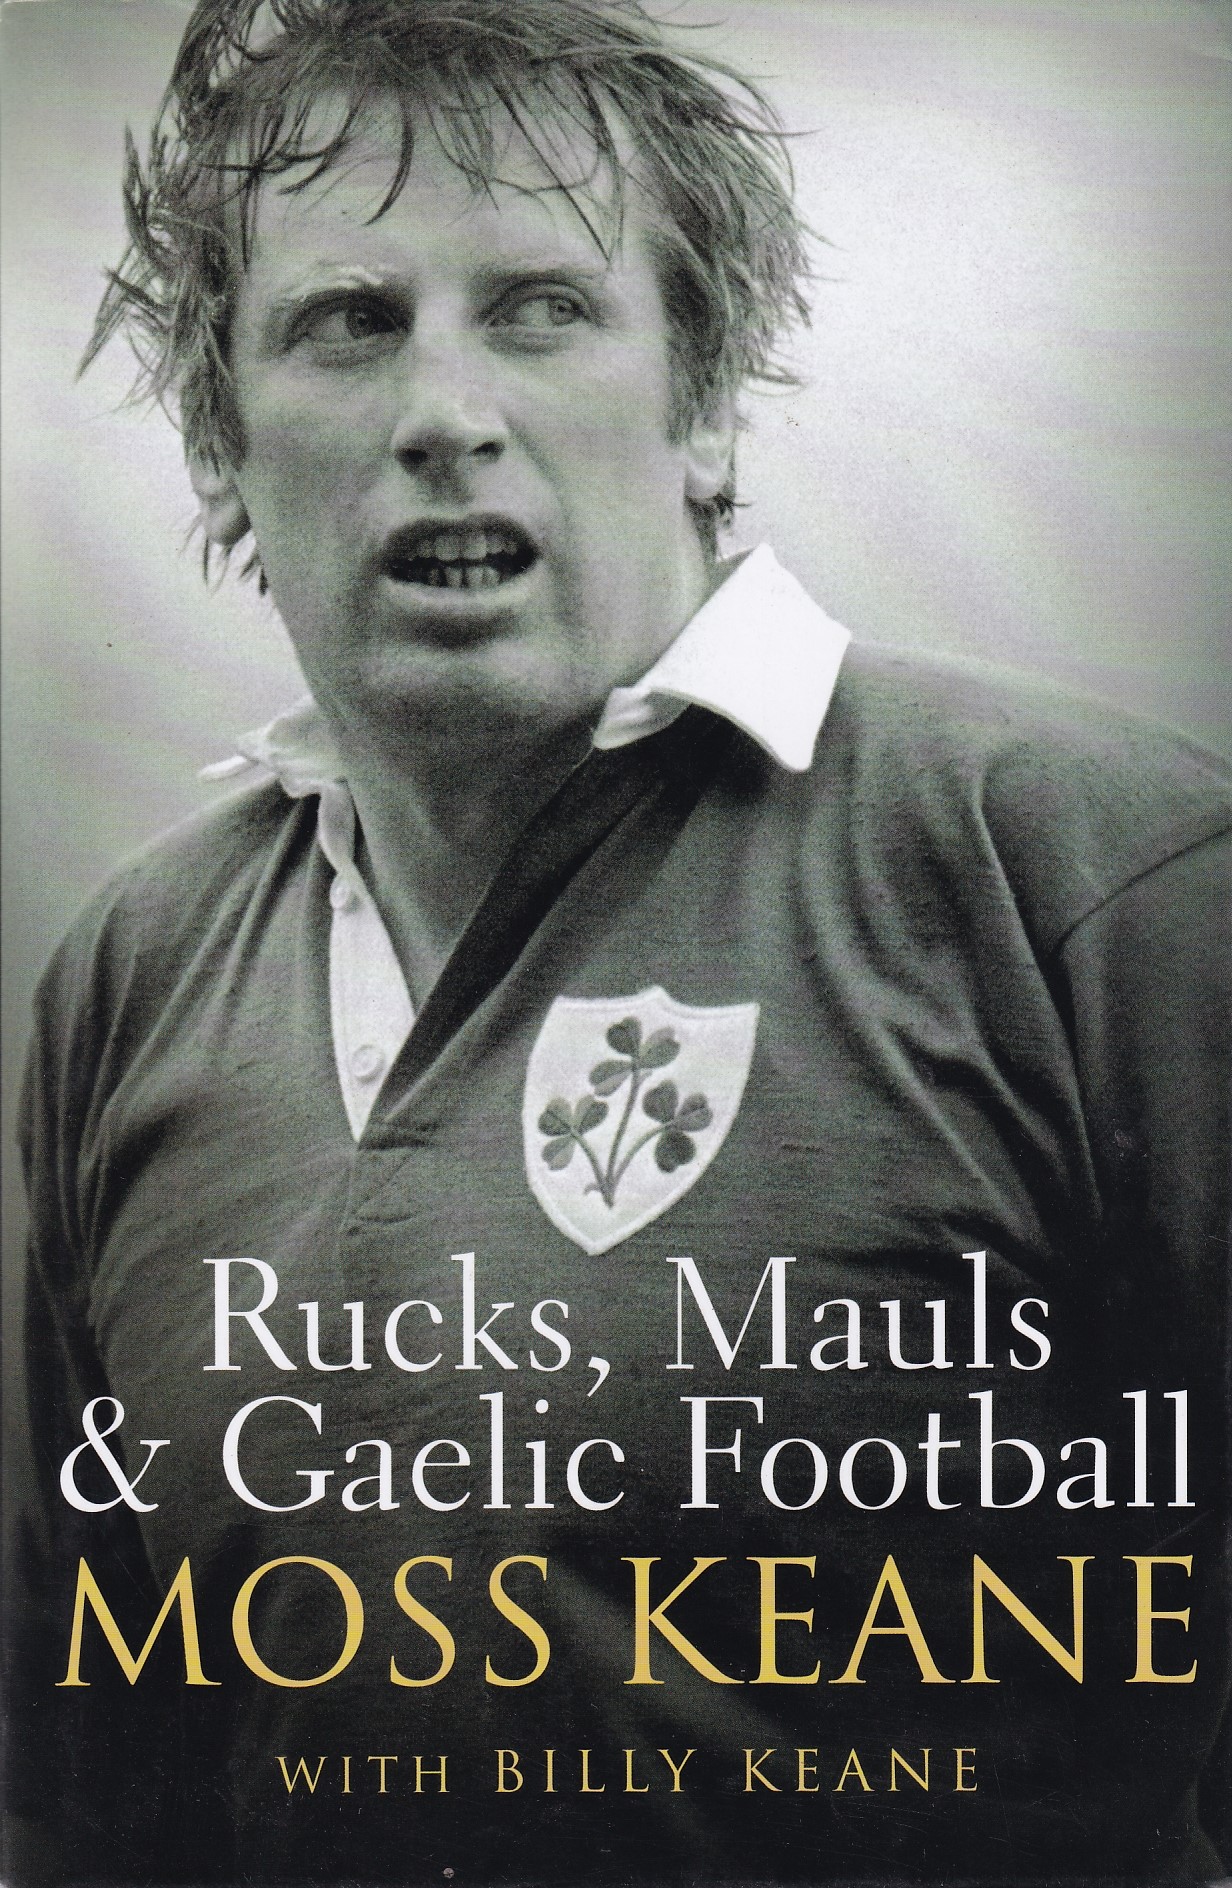 Rucks, Mauls and Gaelic Football | Moss Keane (with Billy Keane) | Charlie Byrne's